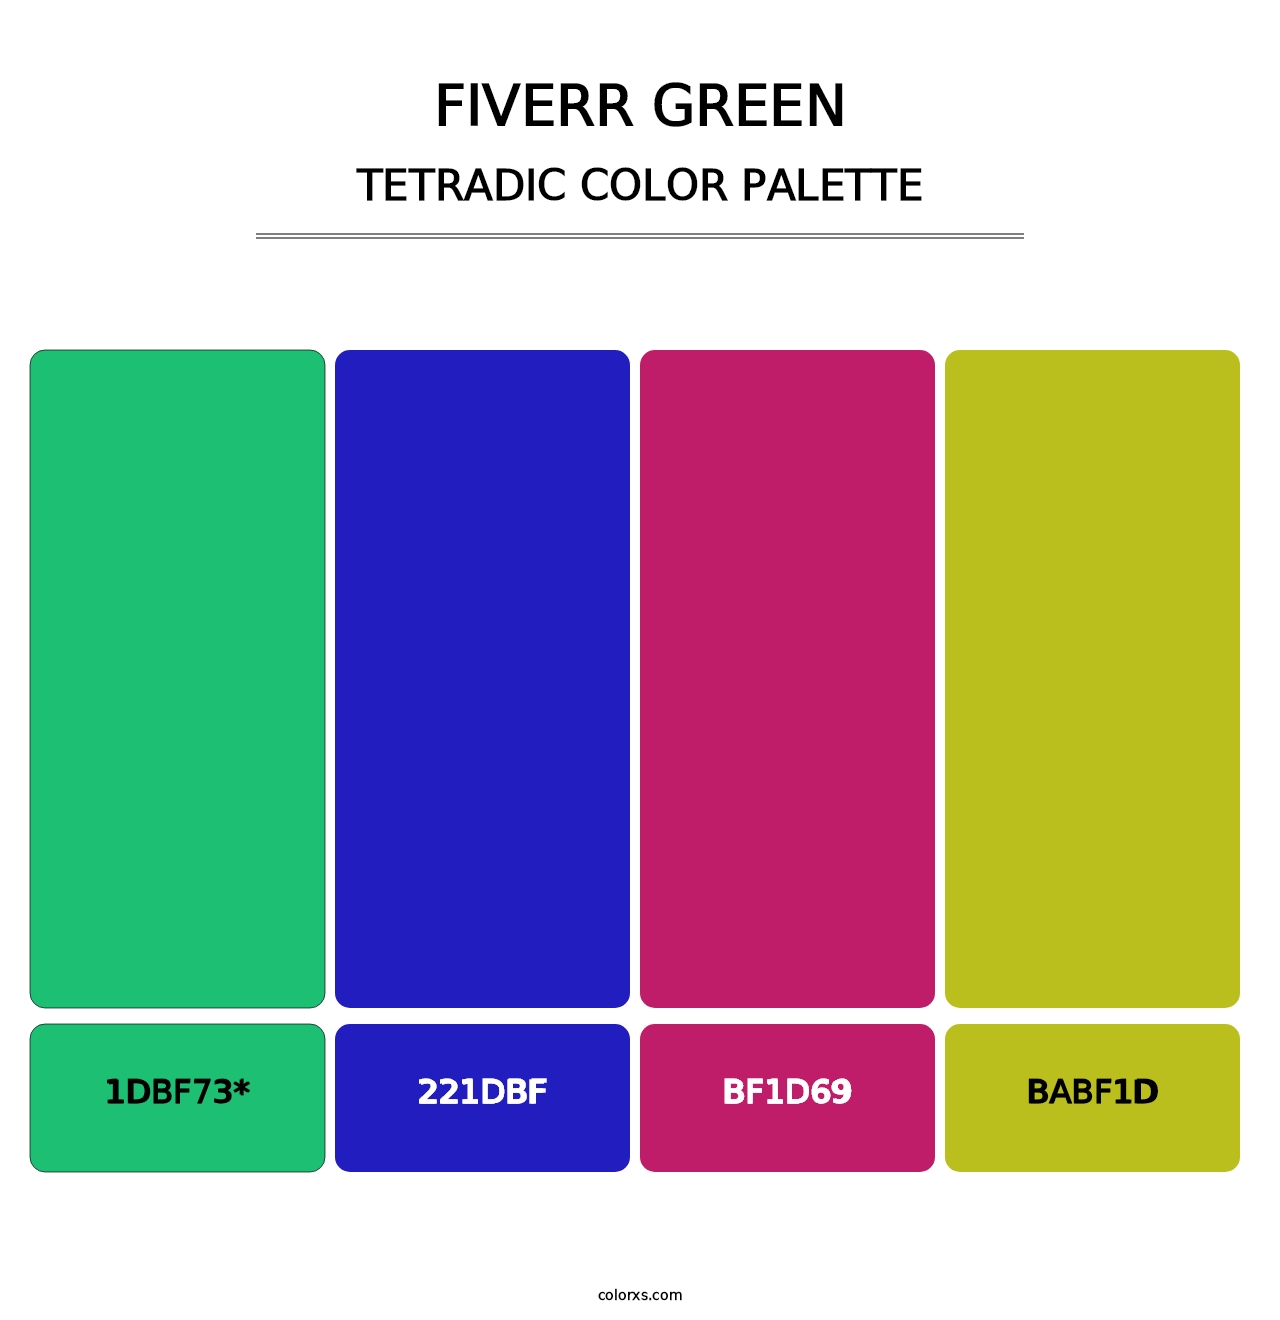 Fiverr Green - Tetradic Color Palette